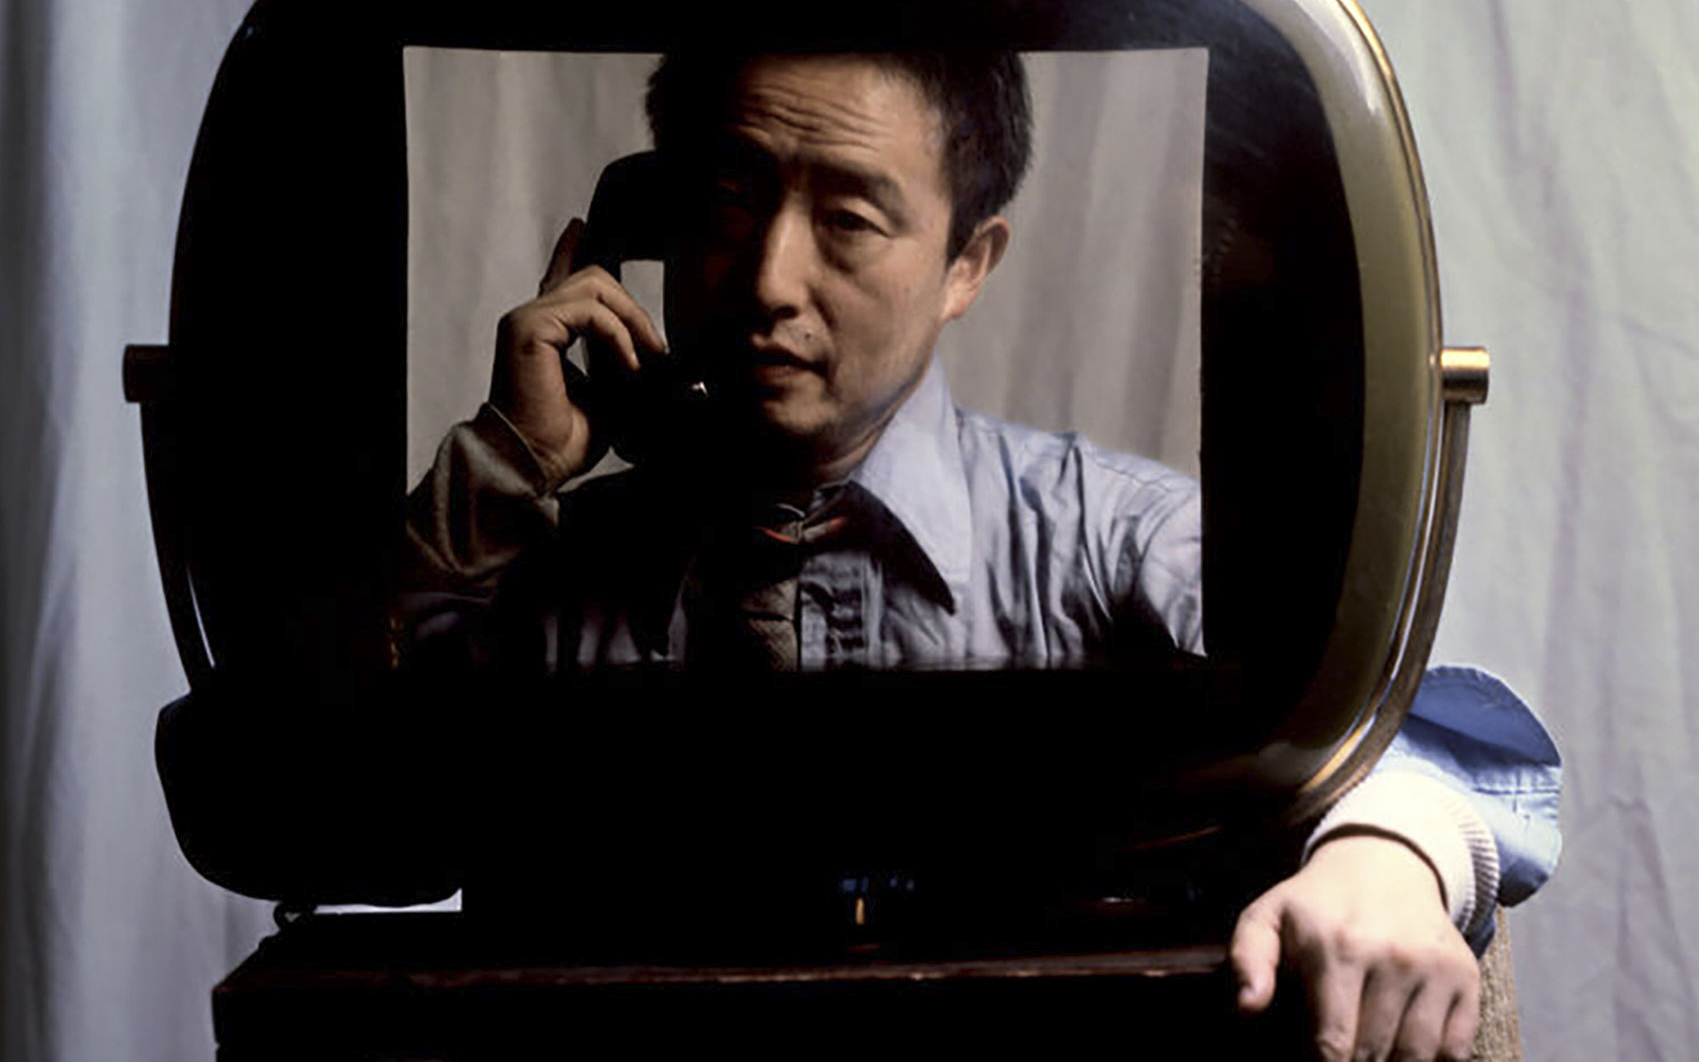 Мужчина с телефонной трубкой у уха сидит в раме в виде экрана телевизора